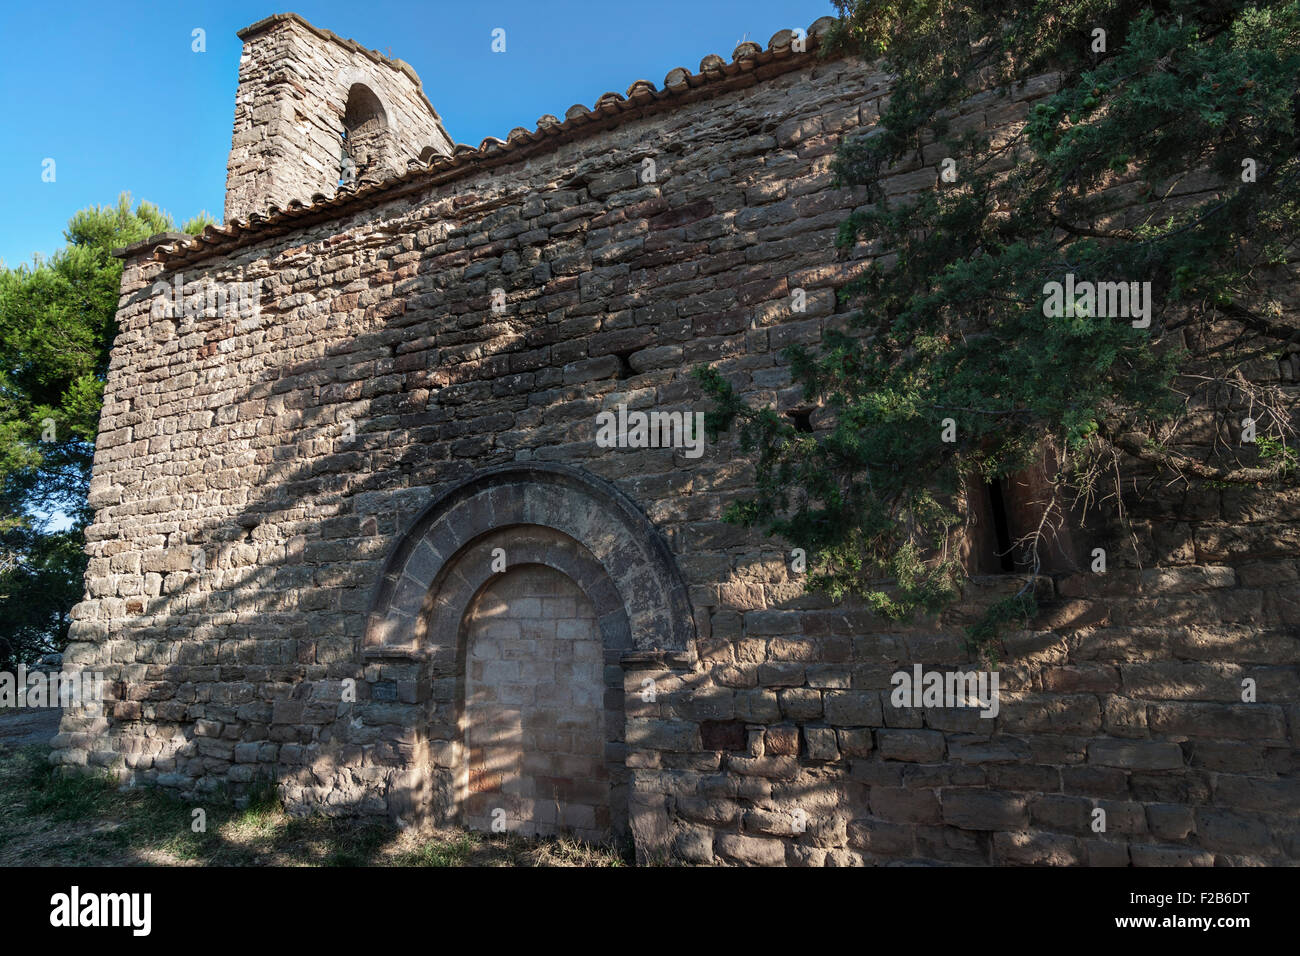 Mare de Deu del castell chapel, Balsareny castle. Balsareny. Stock Photo